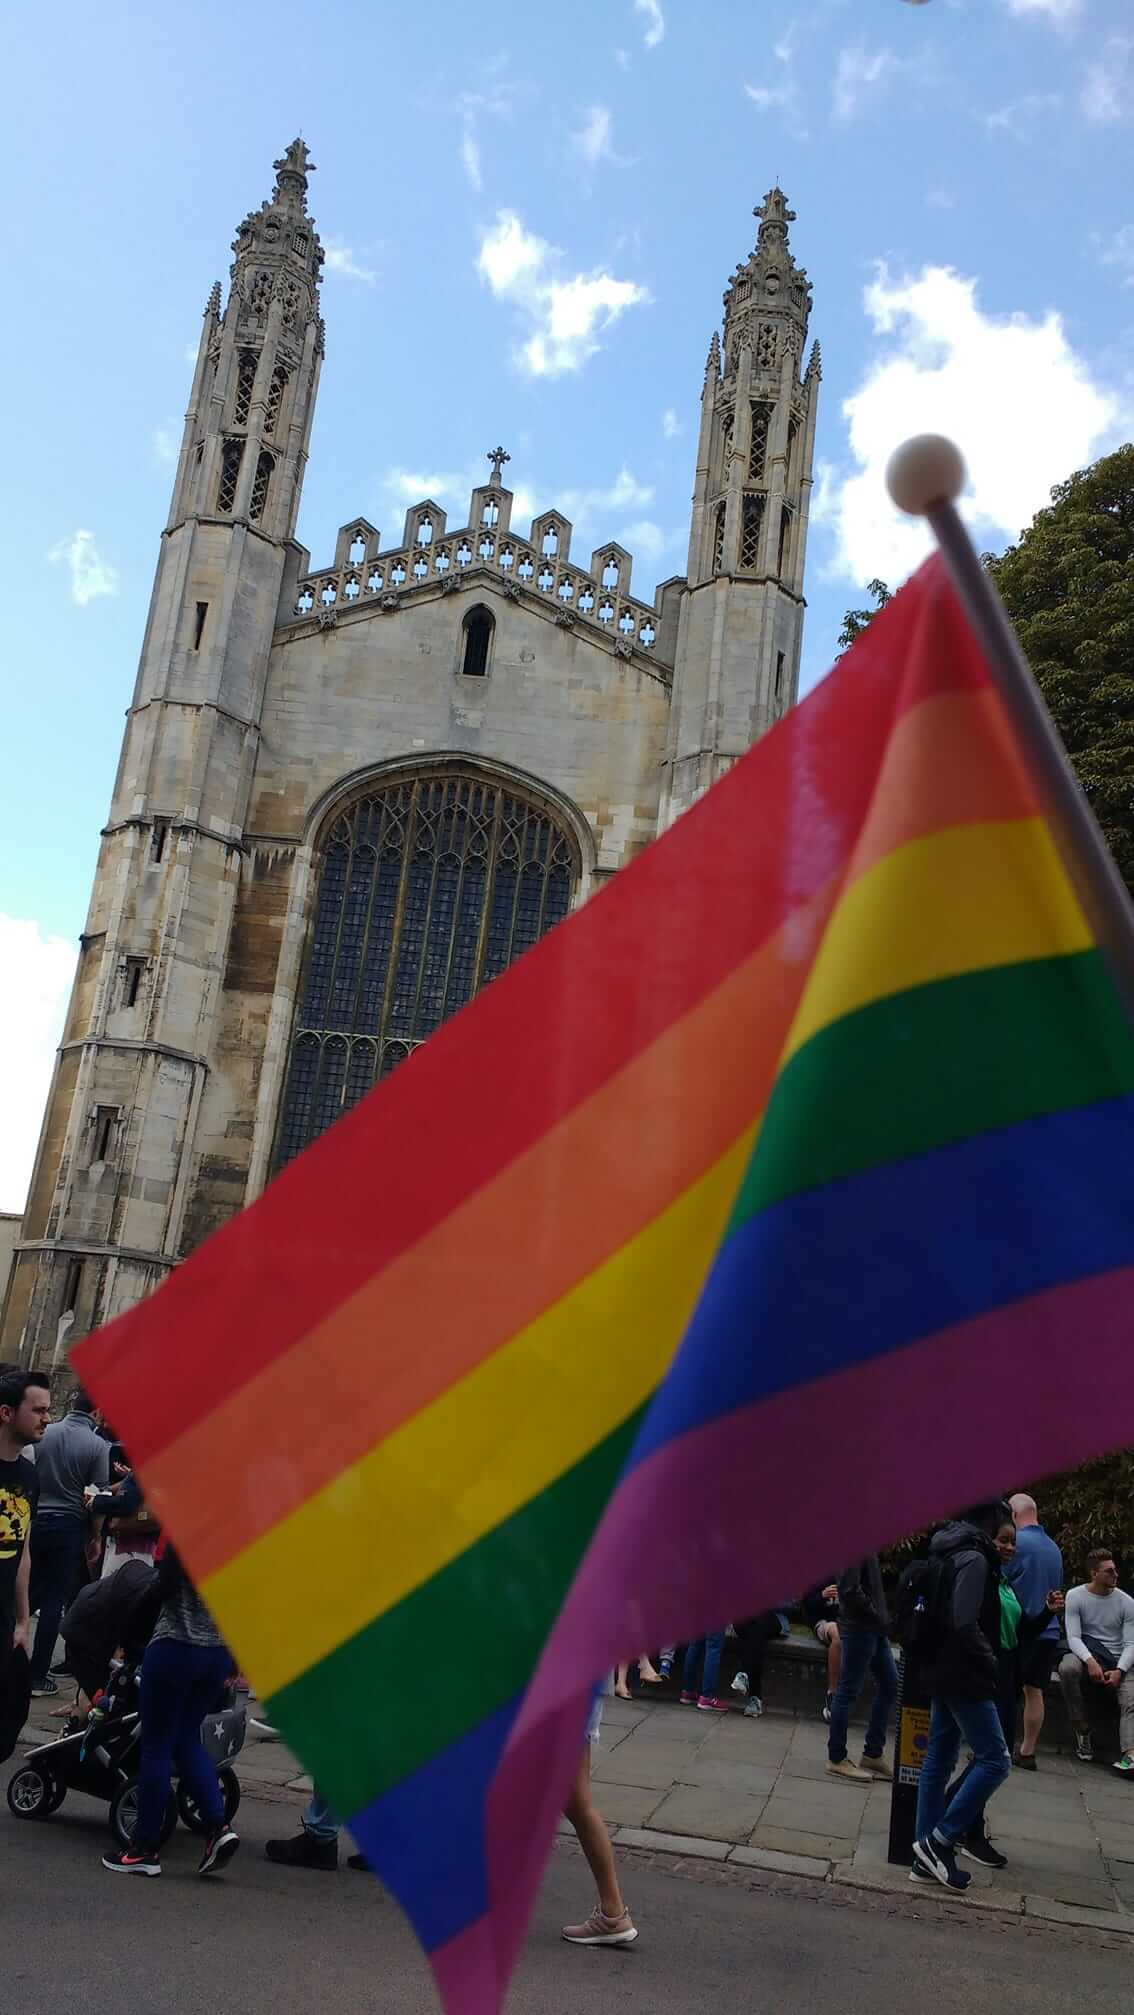 Cambridge Pride event, England